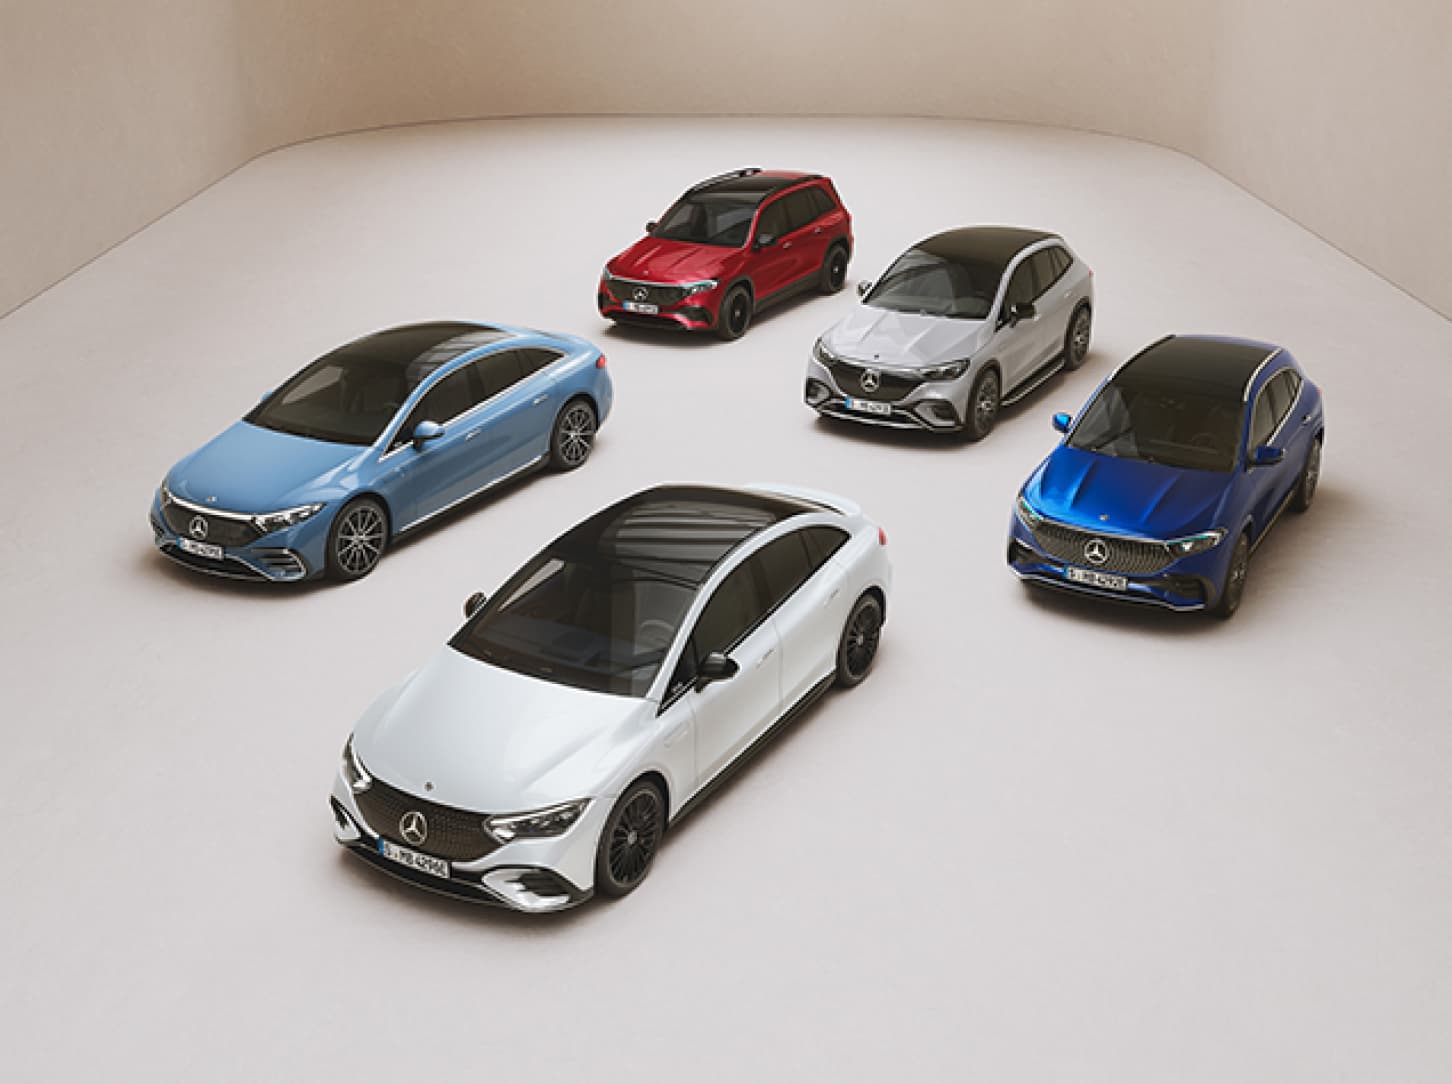 Five electric Mercedes-Benz cars